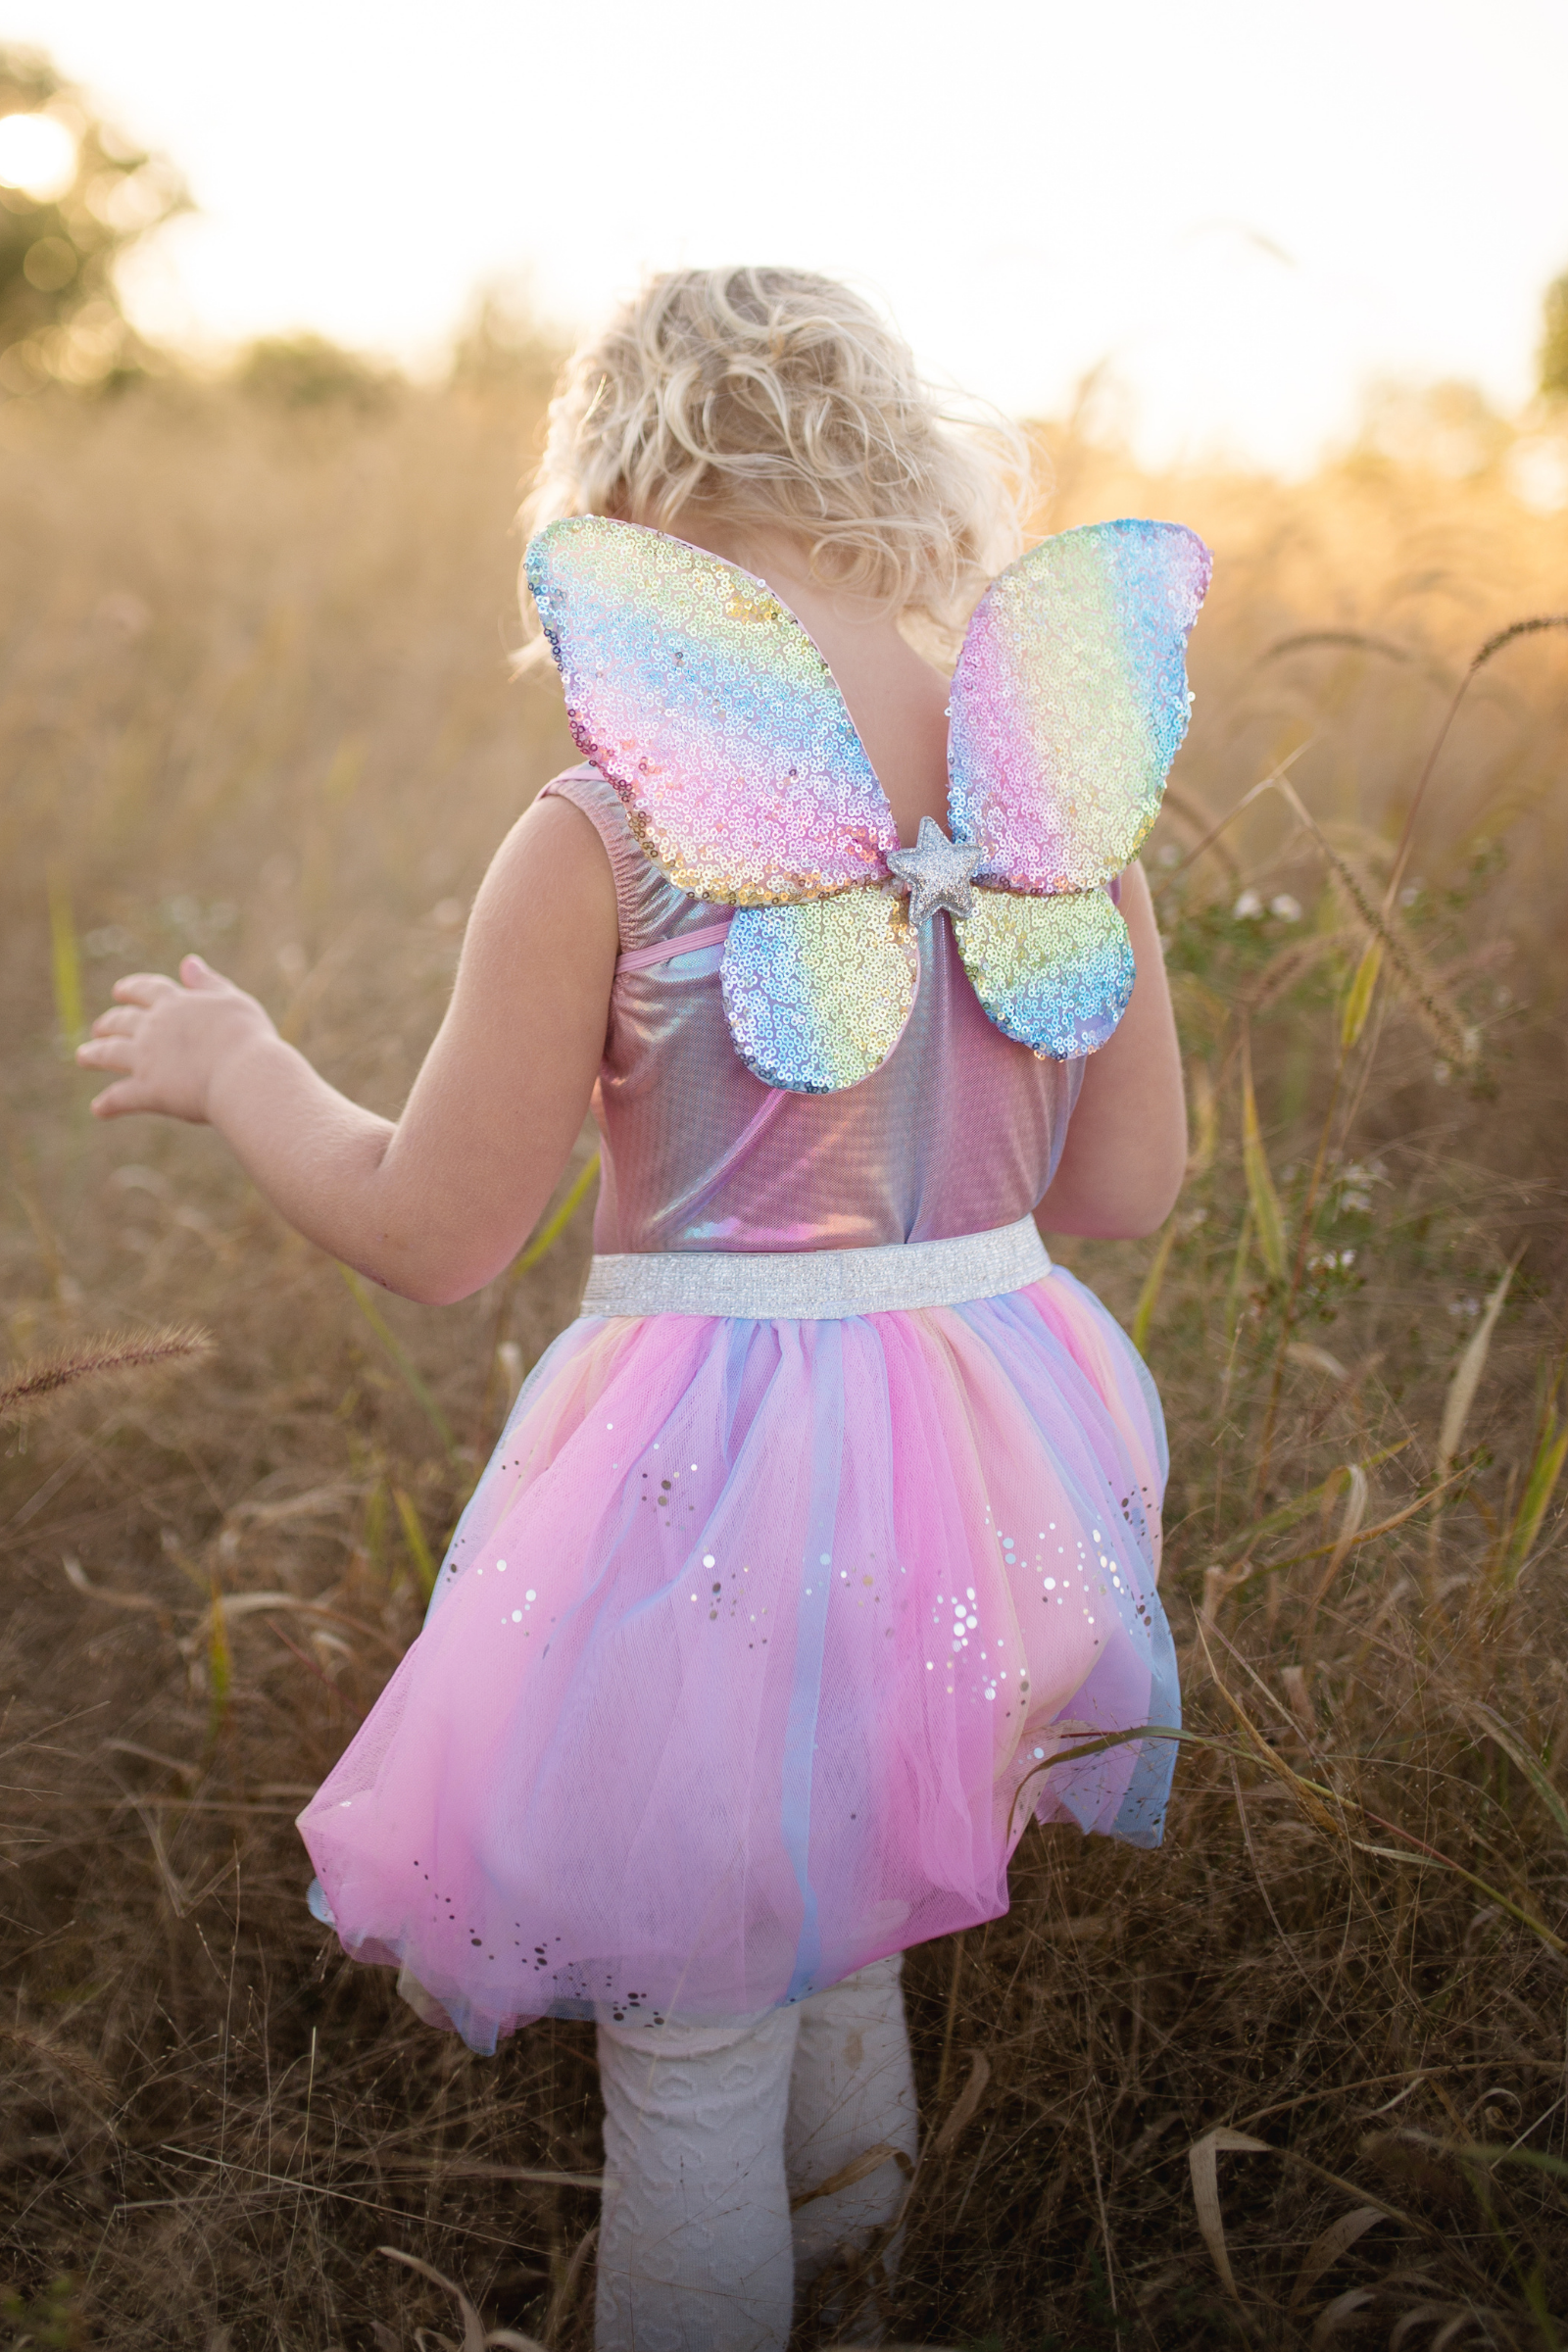 Rainbow Sequins Skirt, Wings & Wand